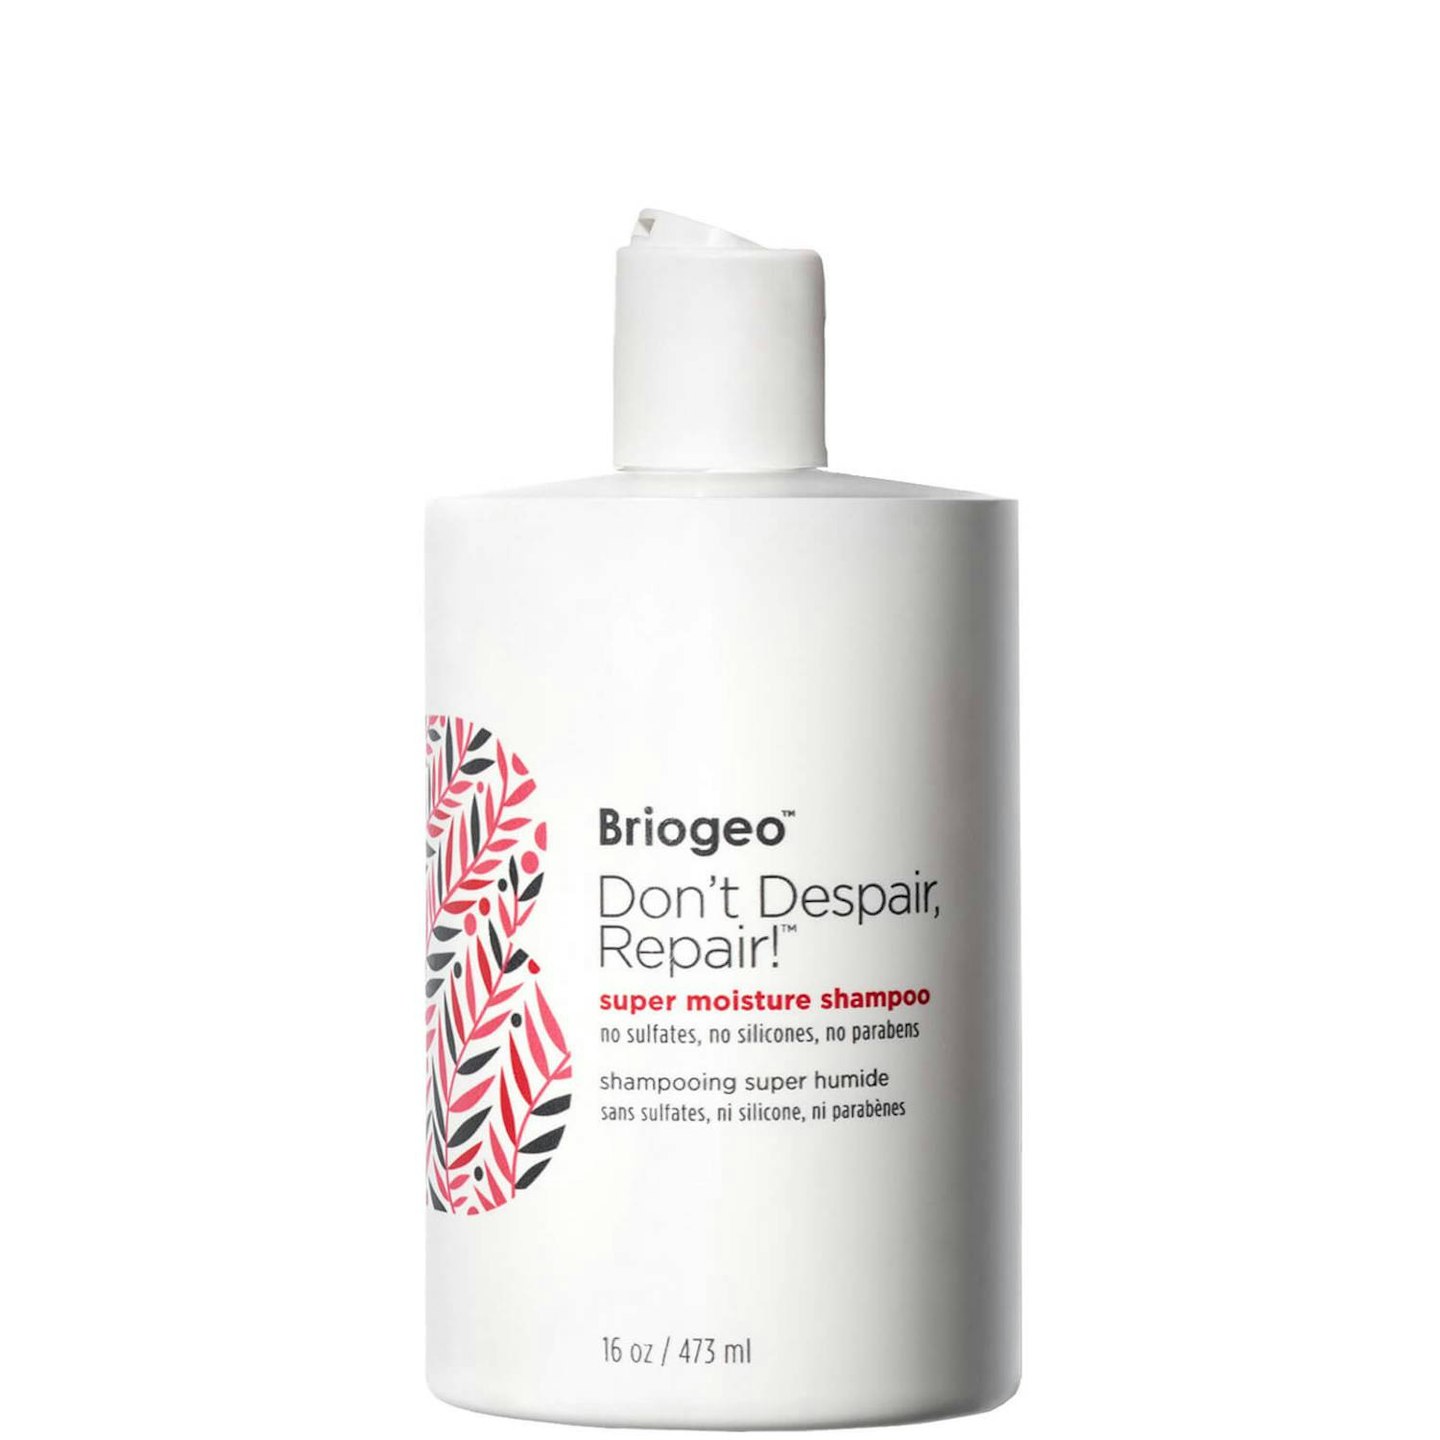 Briogeo shampoo for damaged hair